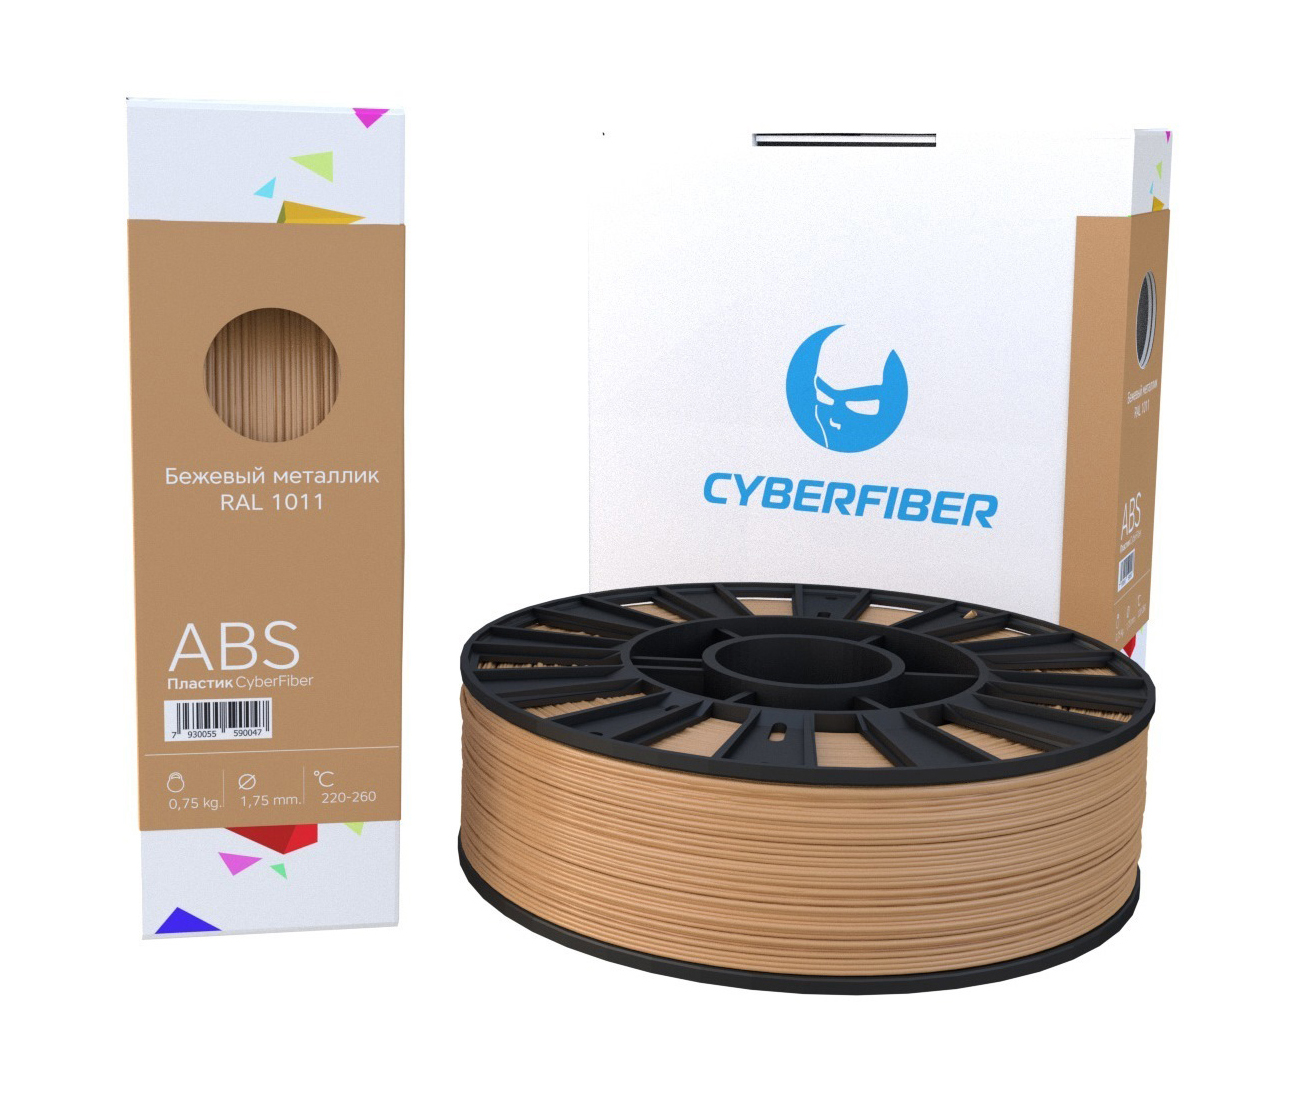 ABS пластик CyberFiber 1,75, бежевый металлик, 750 г